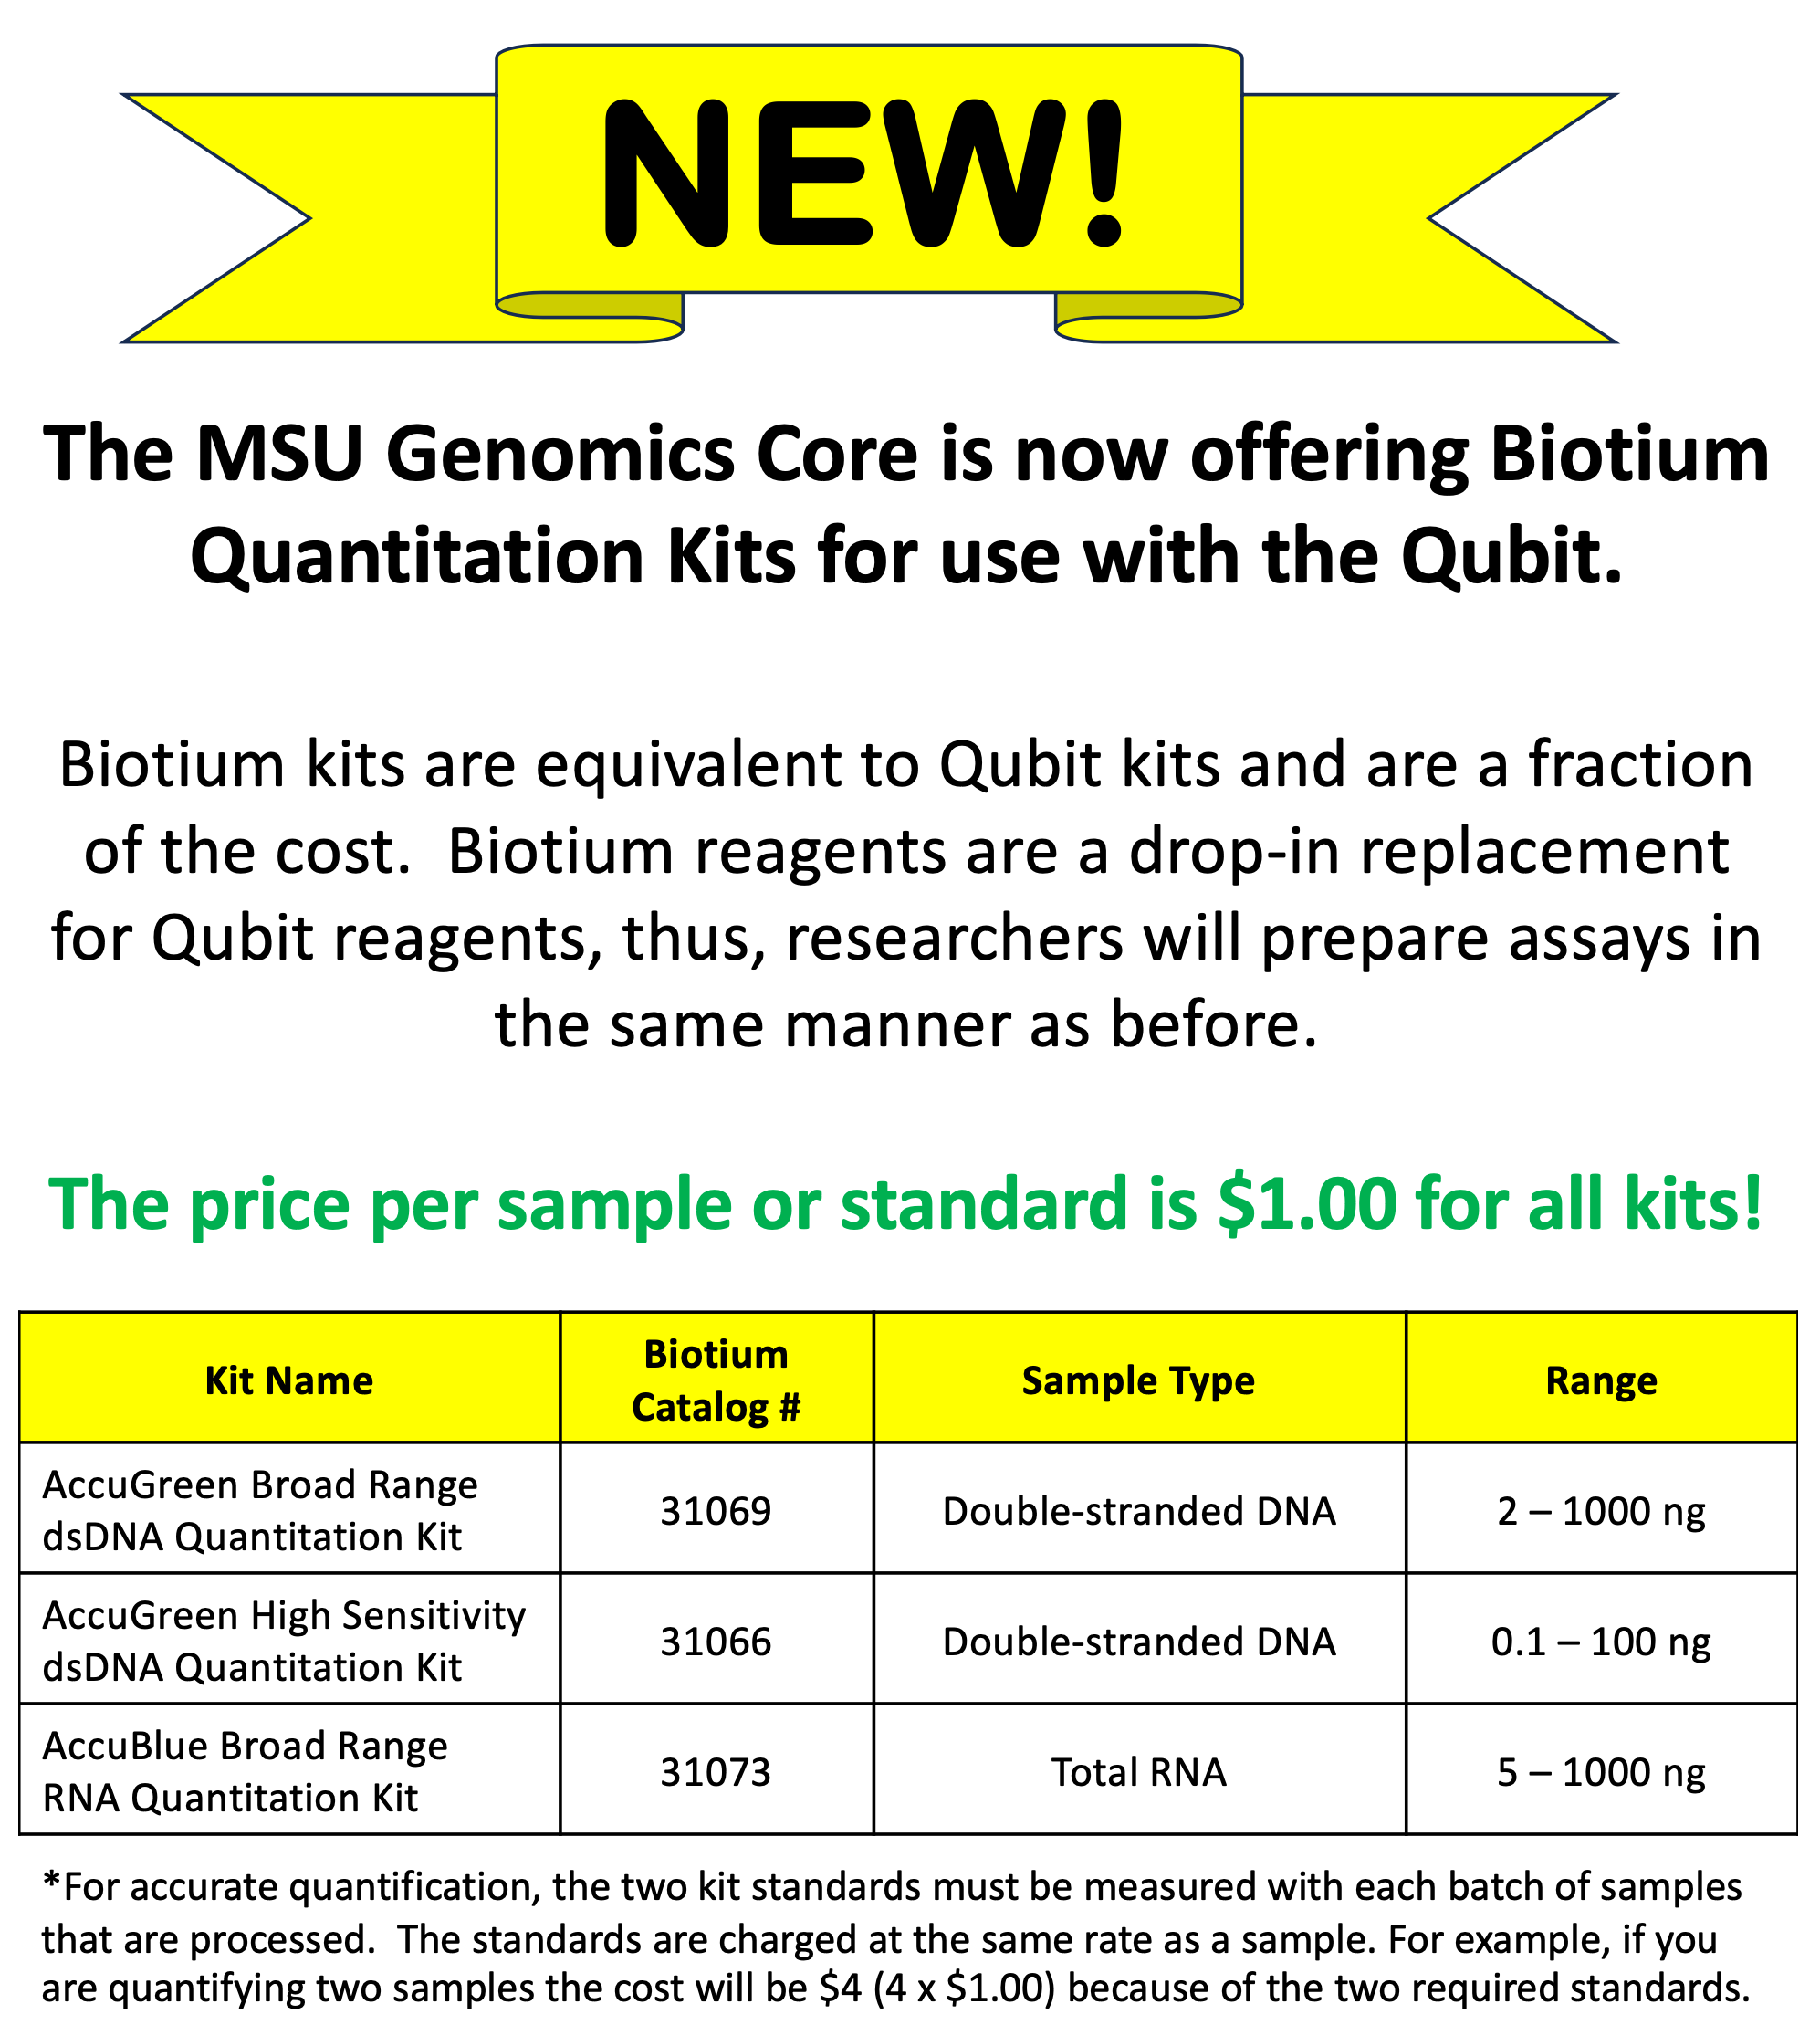 Biotium kit annoucement and description